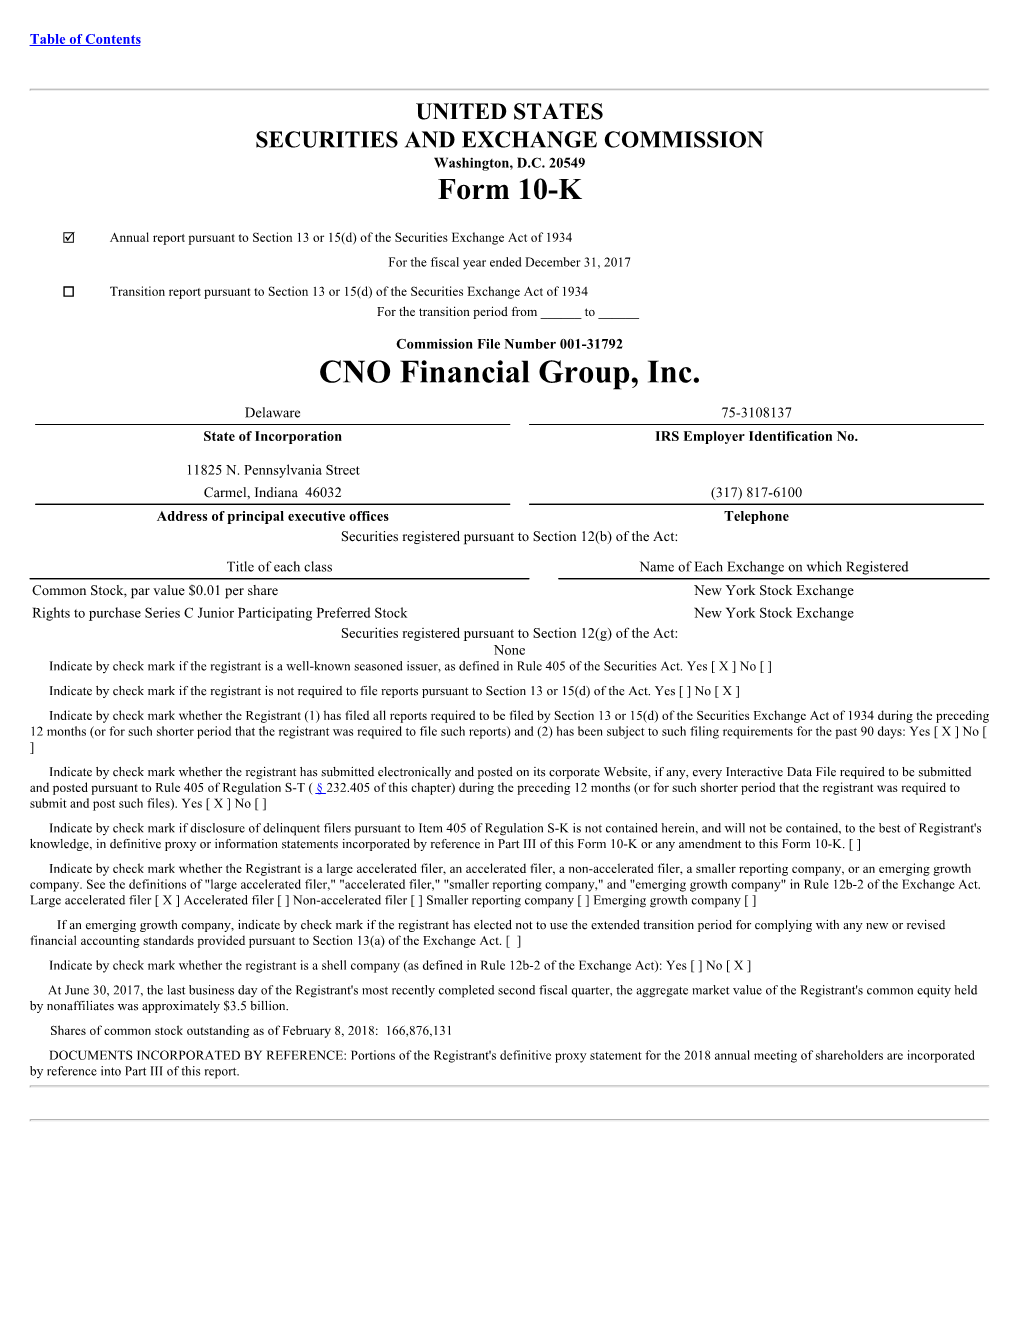 CNO Financial Group, Inc